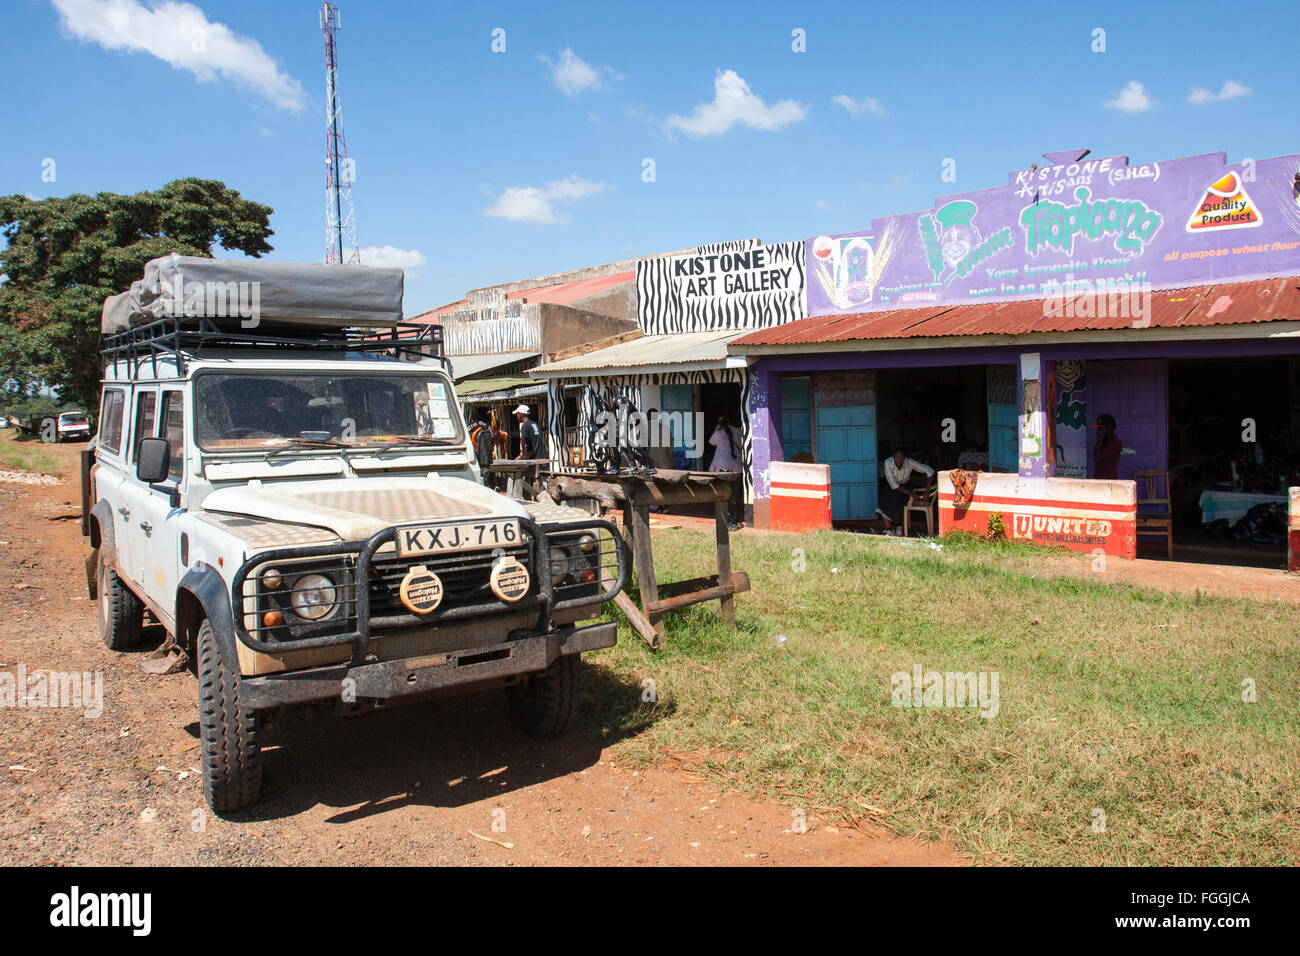 Old Land Rover Defender 110  parked outside rustic tourist art or gift shops Kistone  Kenya Stock Photo